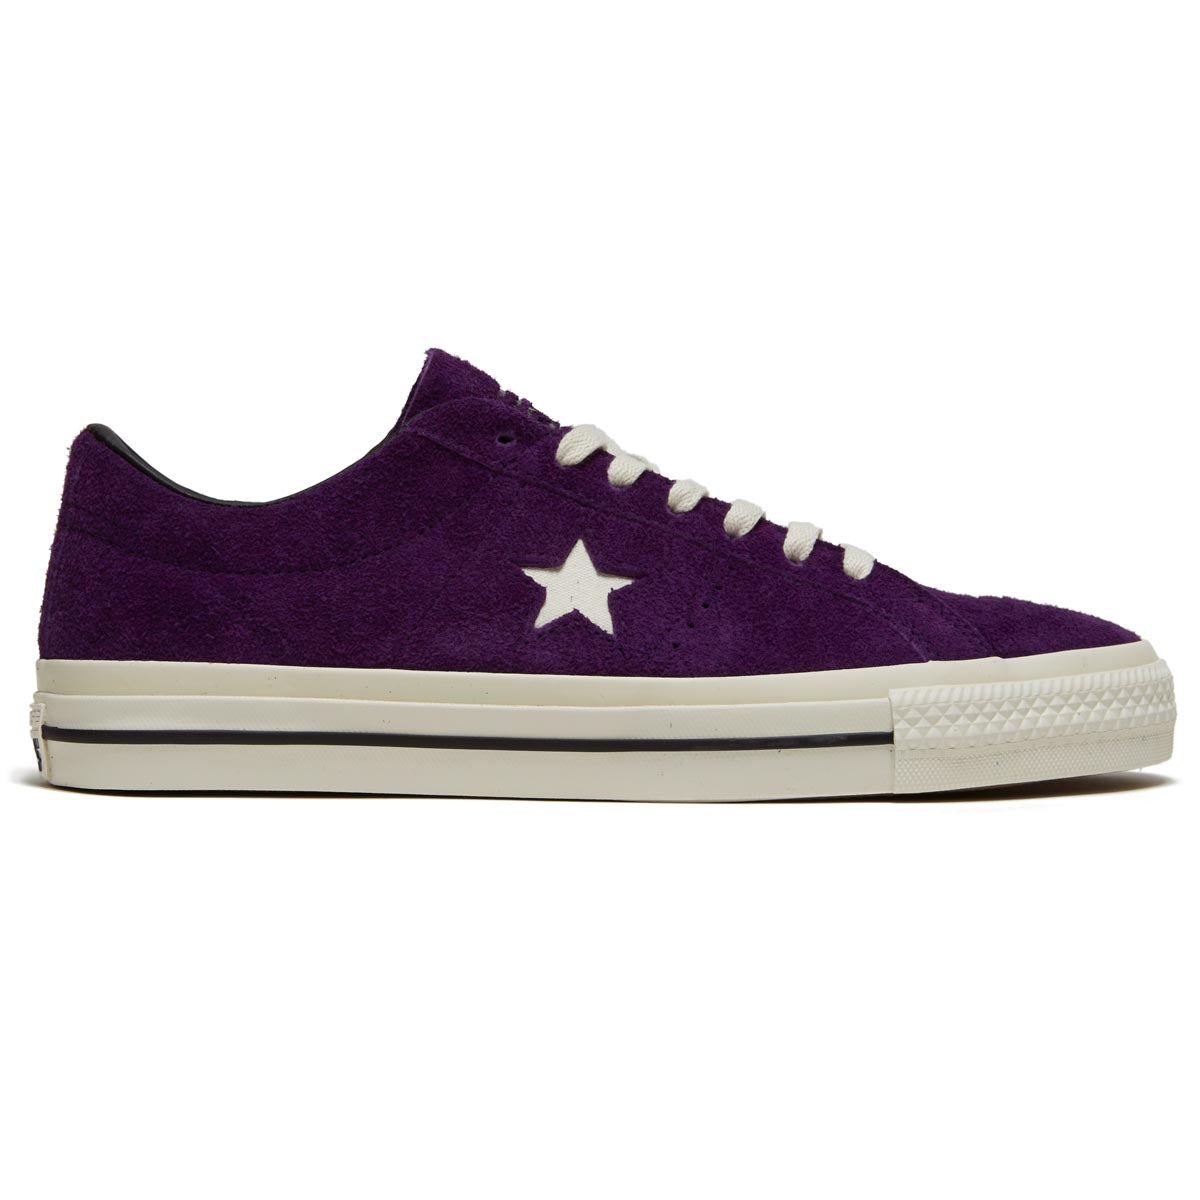 Converse One Star Pro Ox Shoes - Night Purple/Egret/Black image 1